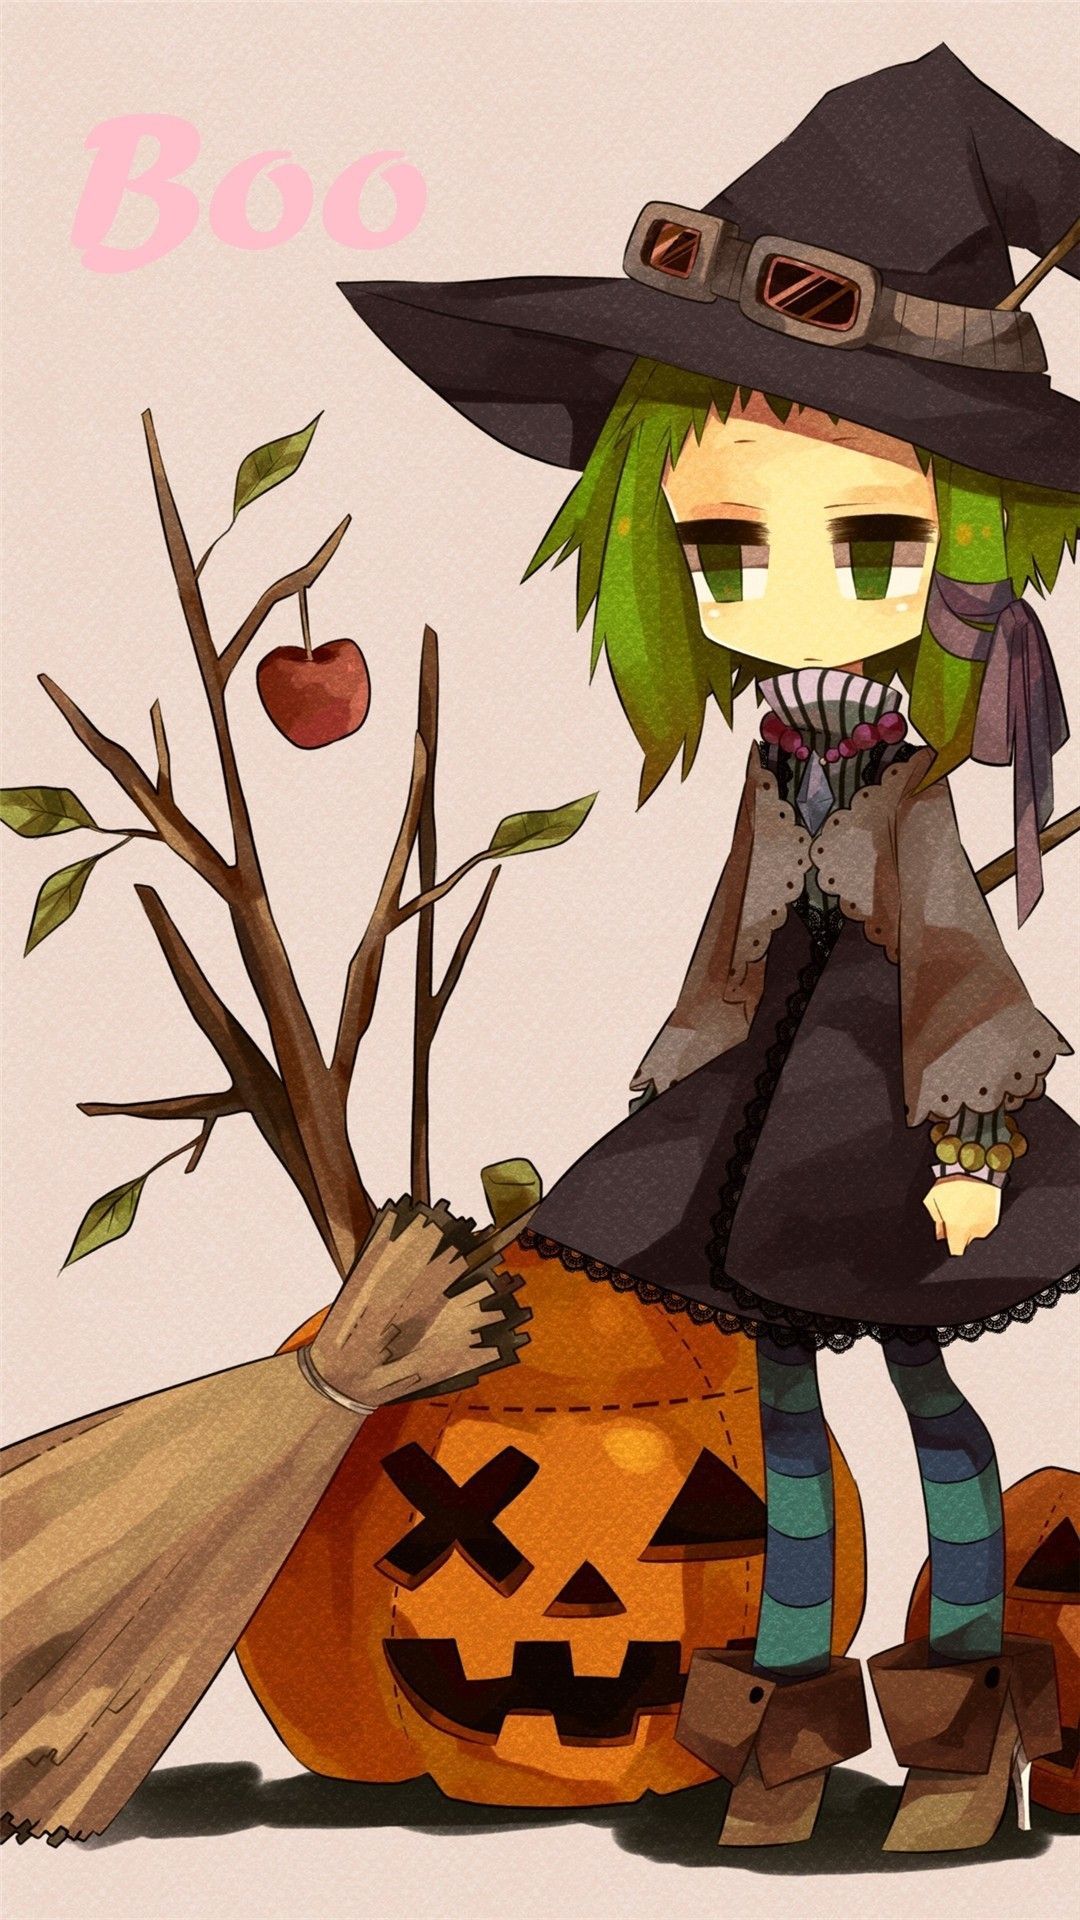 Halloween BOO iPhone Wallpaper, witch hat, broom, pumpkin #Halloween #HalloweenWallpaper